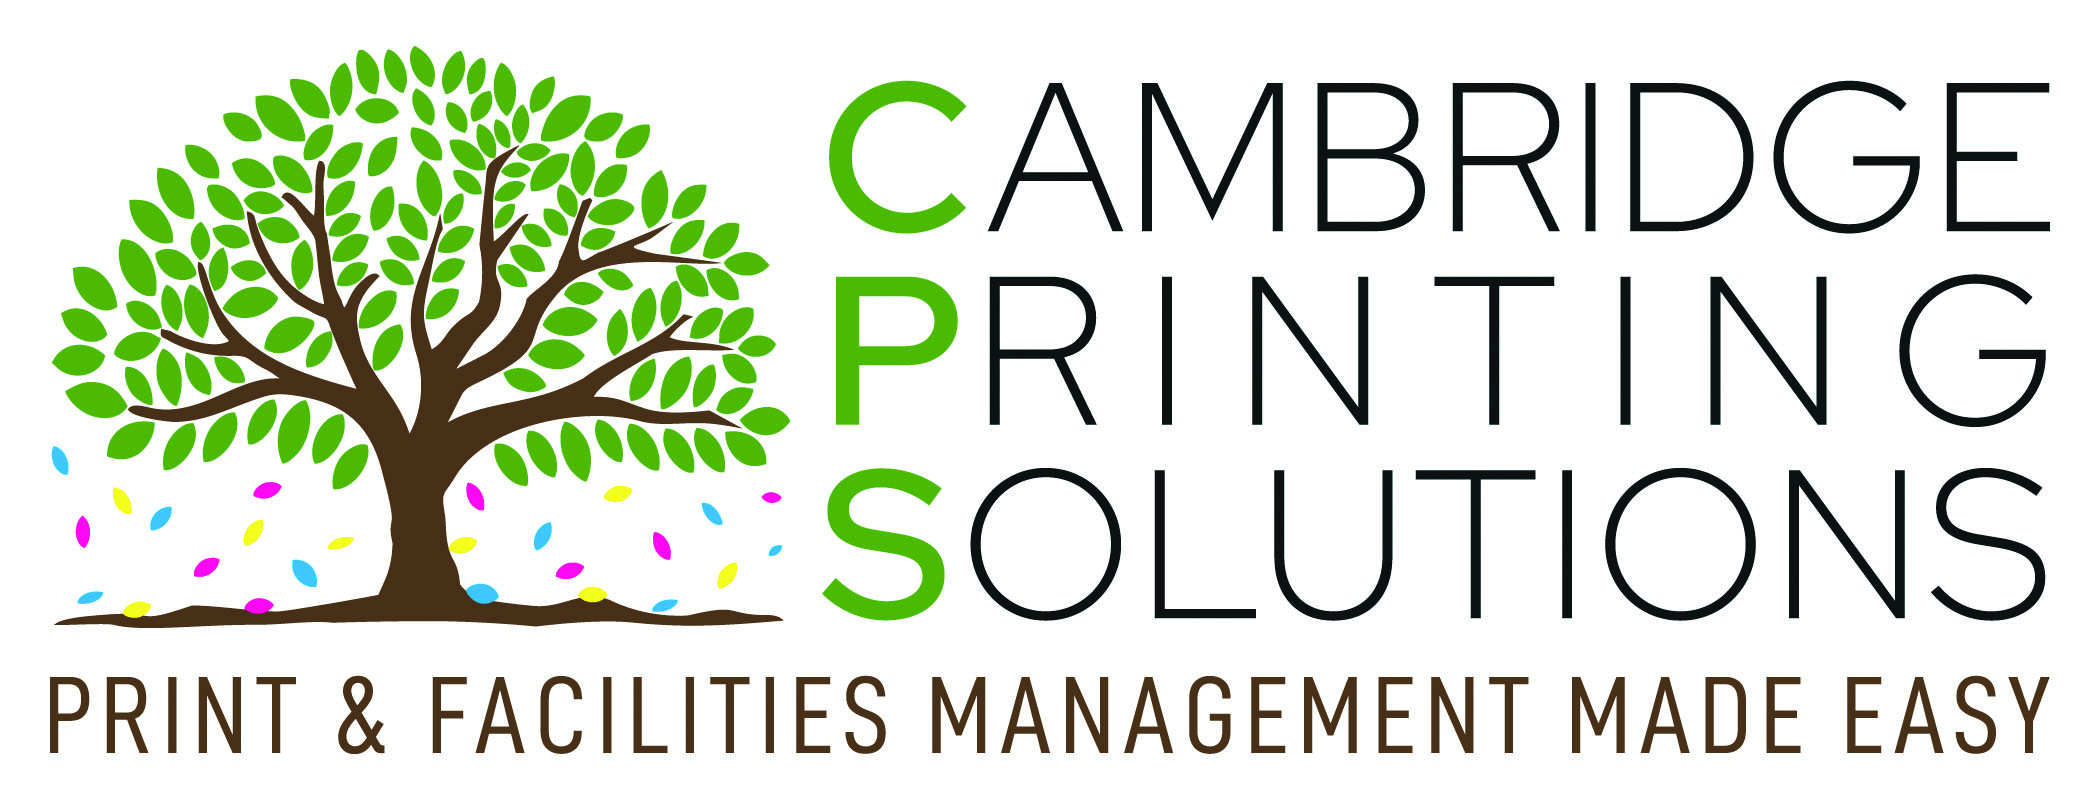 Cambridge Printing Solutions (Digital) Ltd Logo